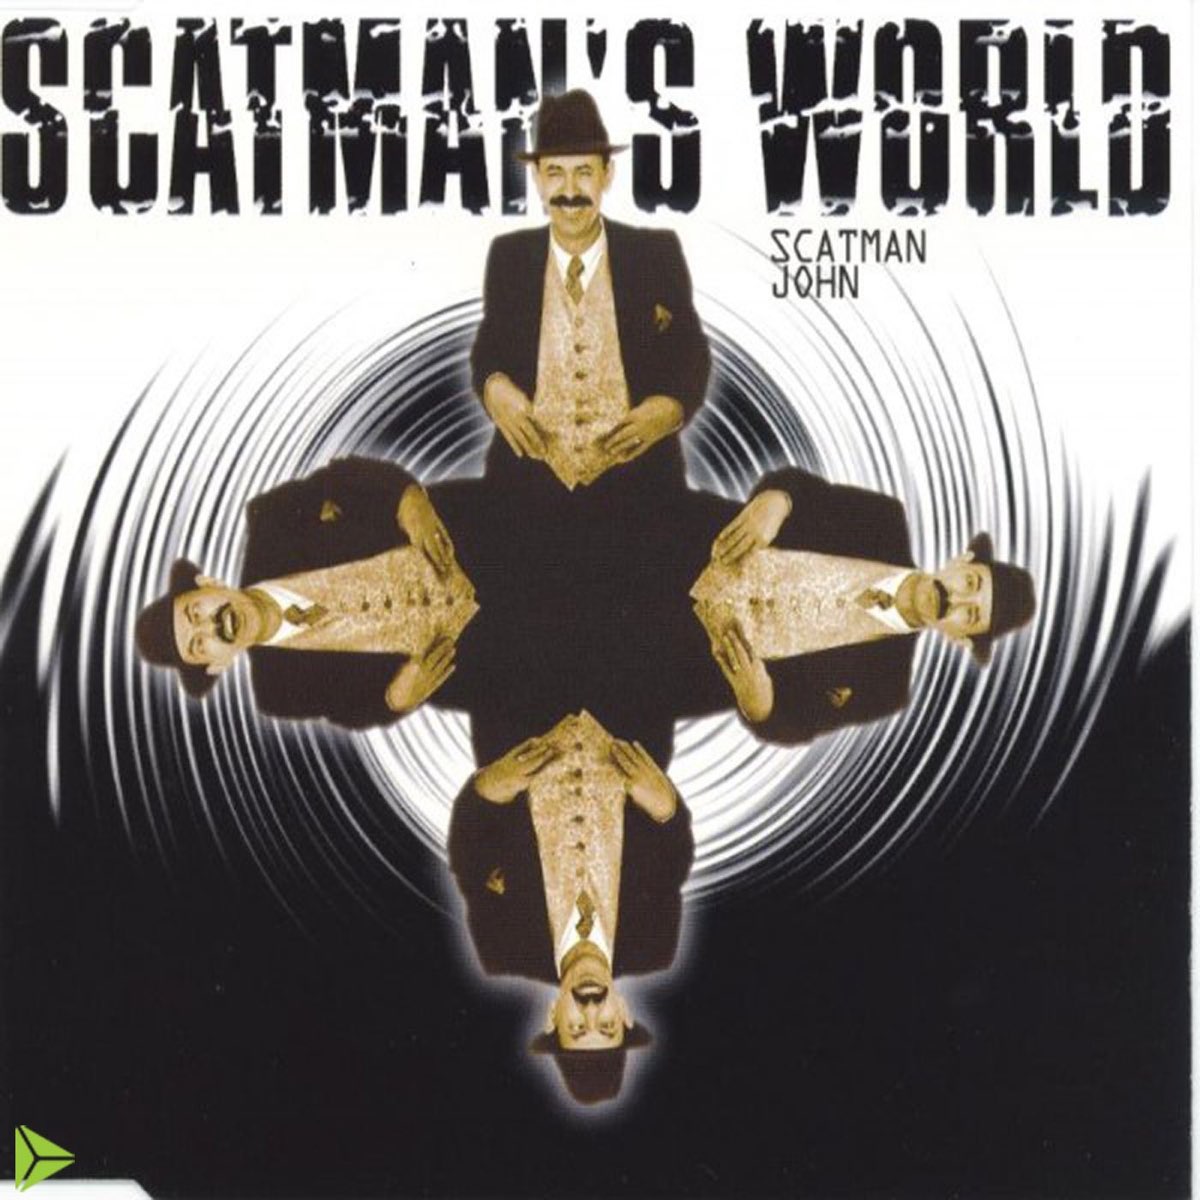 Ski ba bop ba dop bop текст. Скетмен Джон. Скэтмэн. Scatman John Scatman's World. Scatman John album Scatman World.